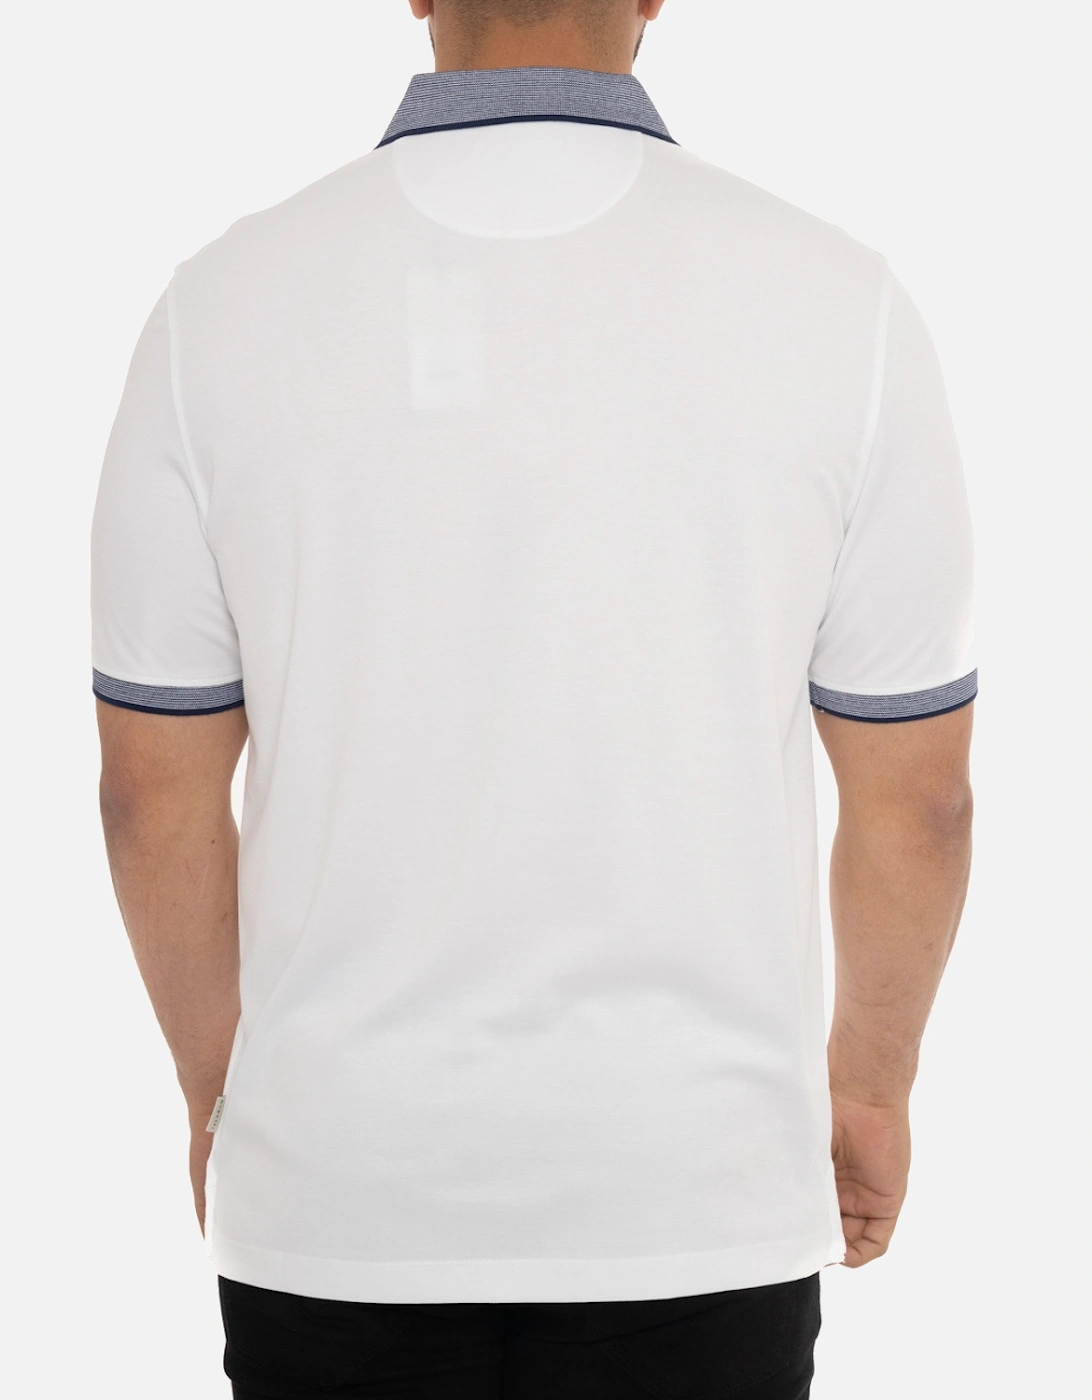 Mens Textured Polo Shirt (White)